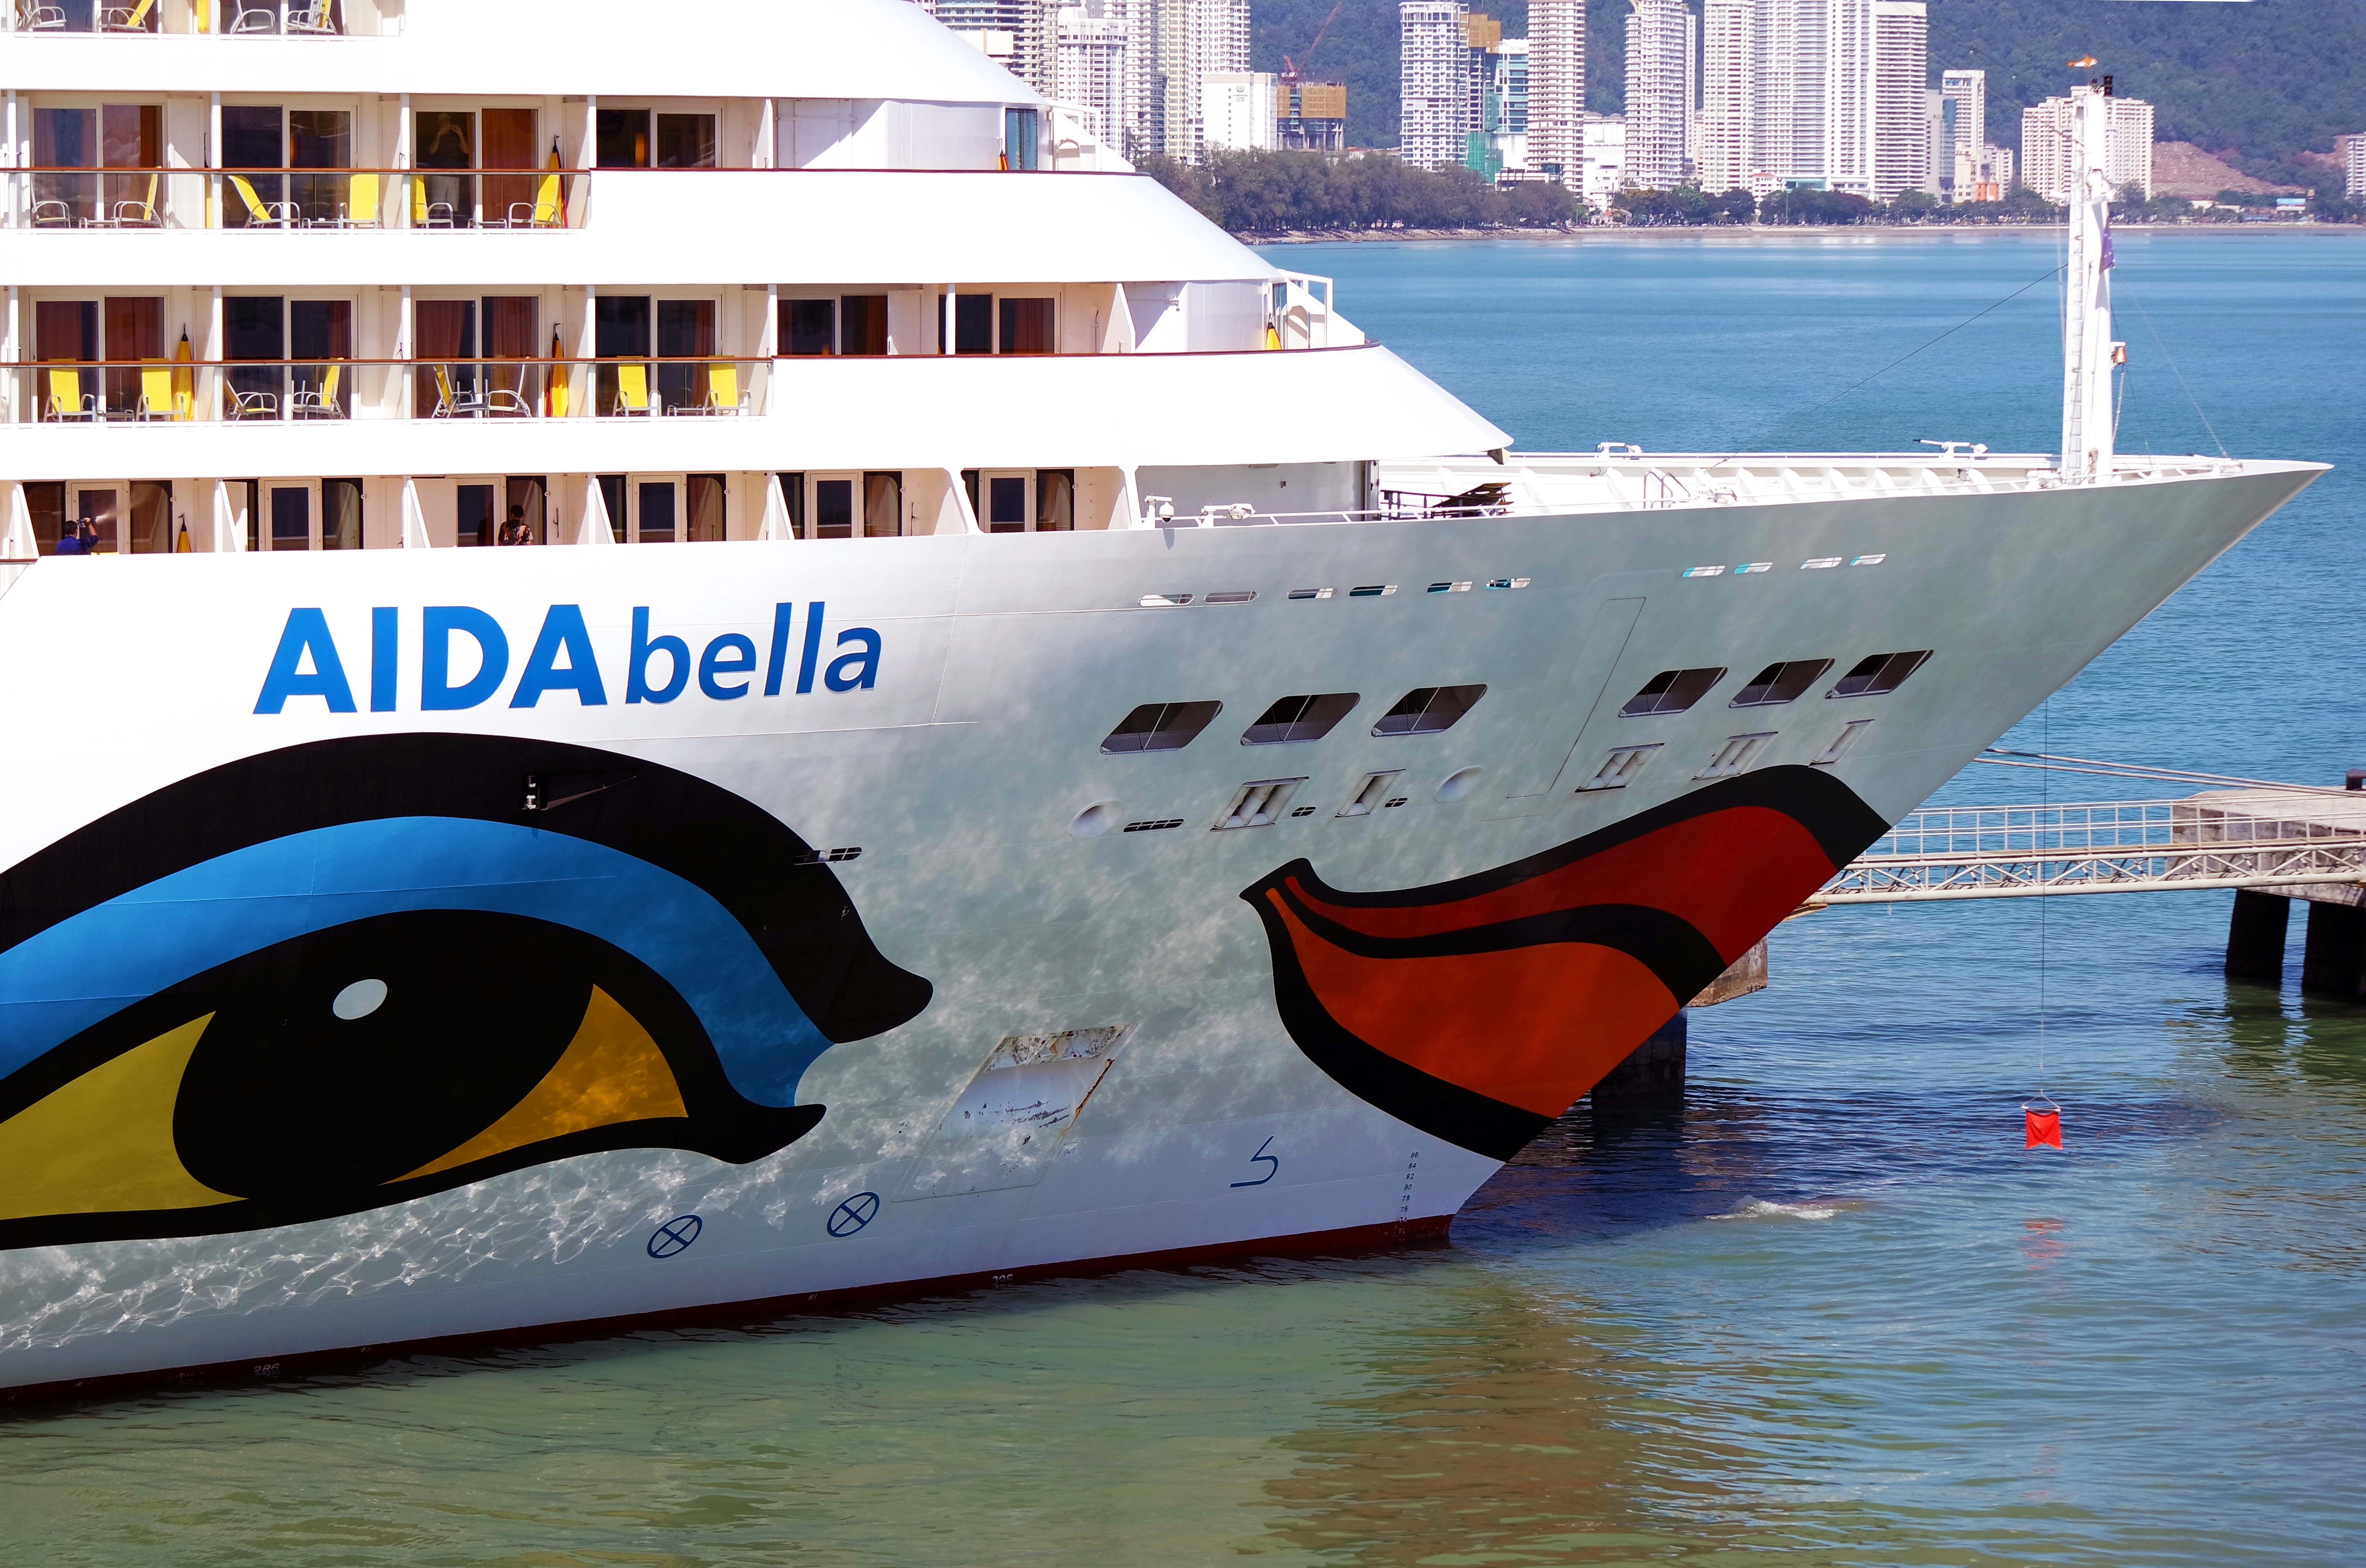 MS AIDAbella bow AIDA Cruises